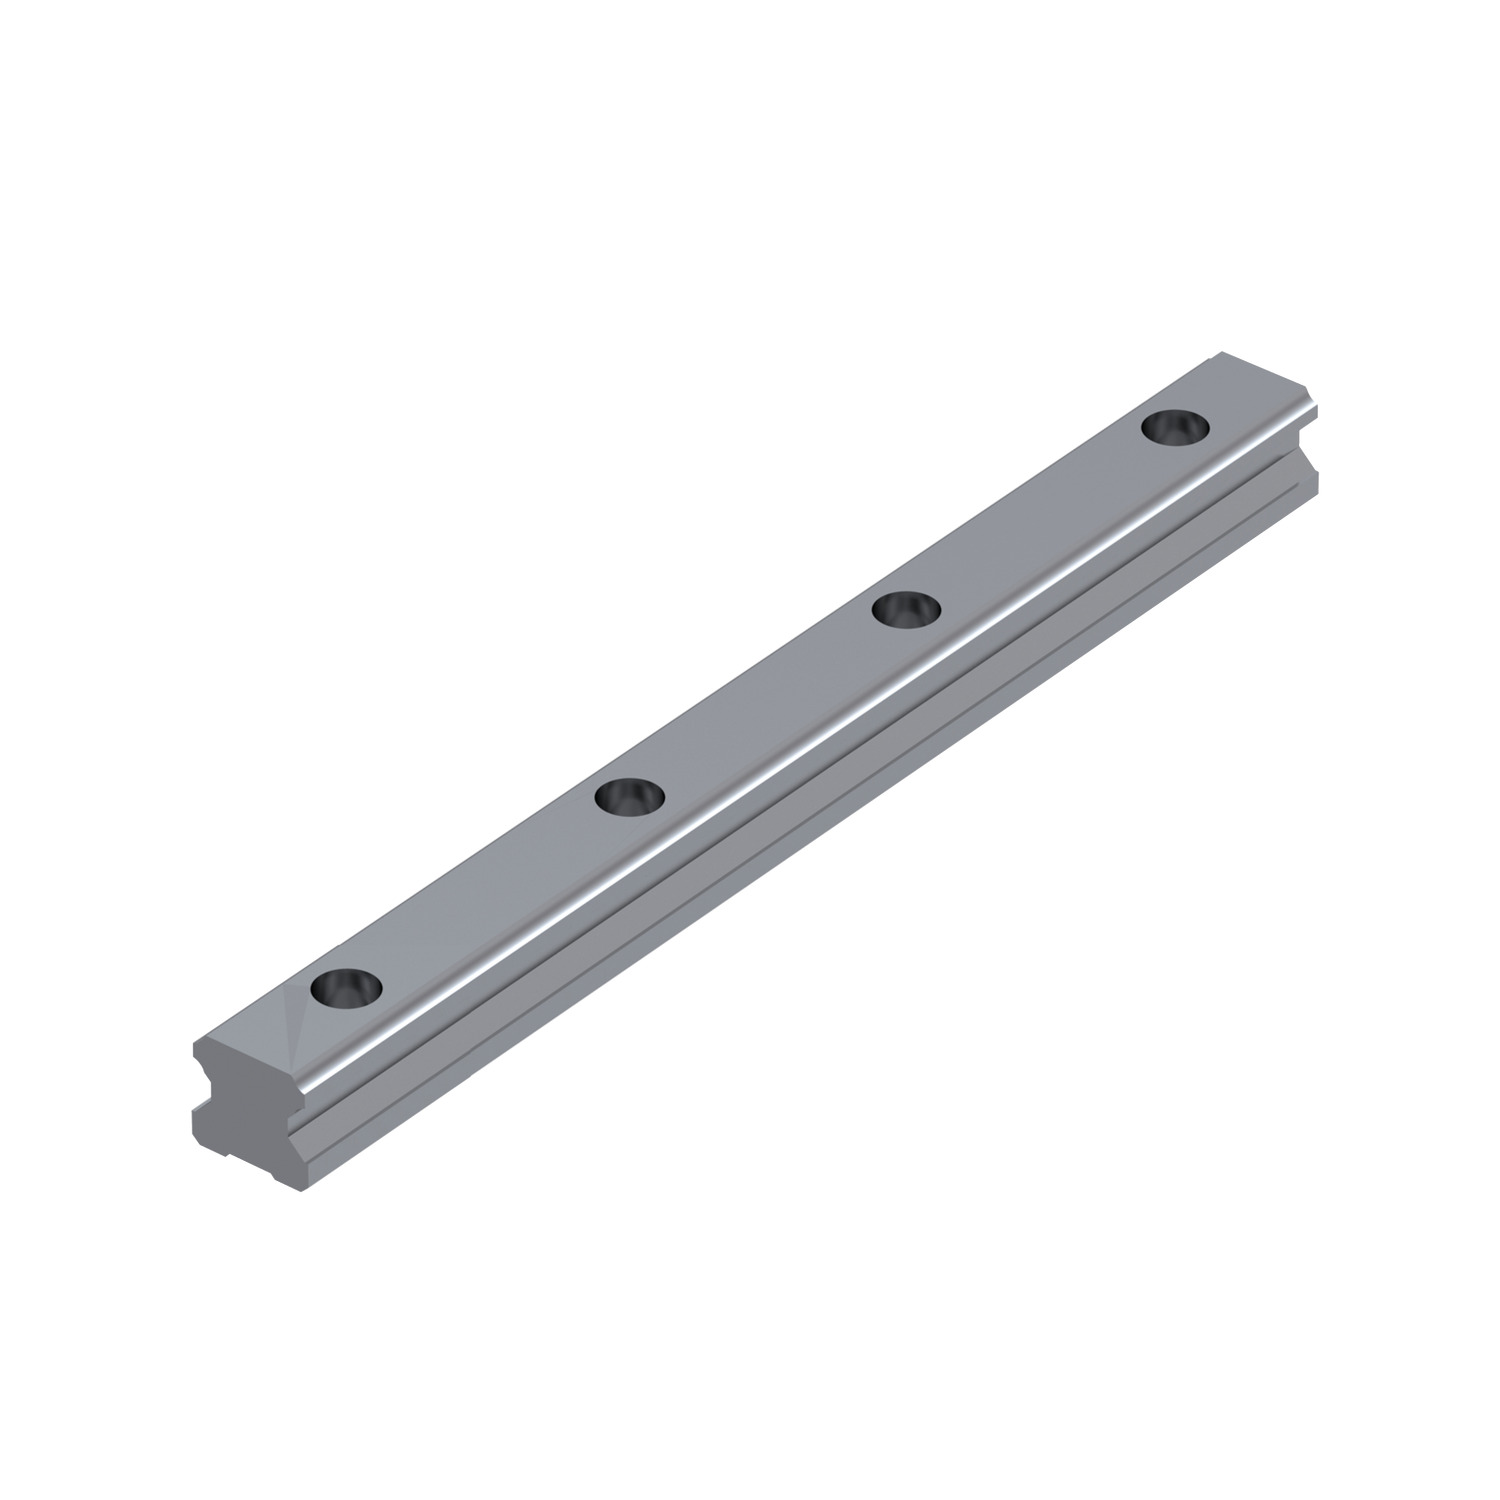 L1016.45 - 45mm Linear Guide Rail